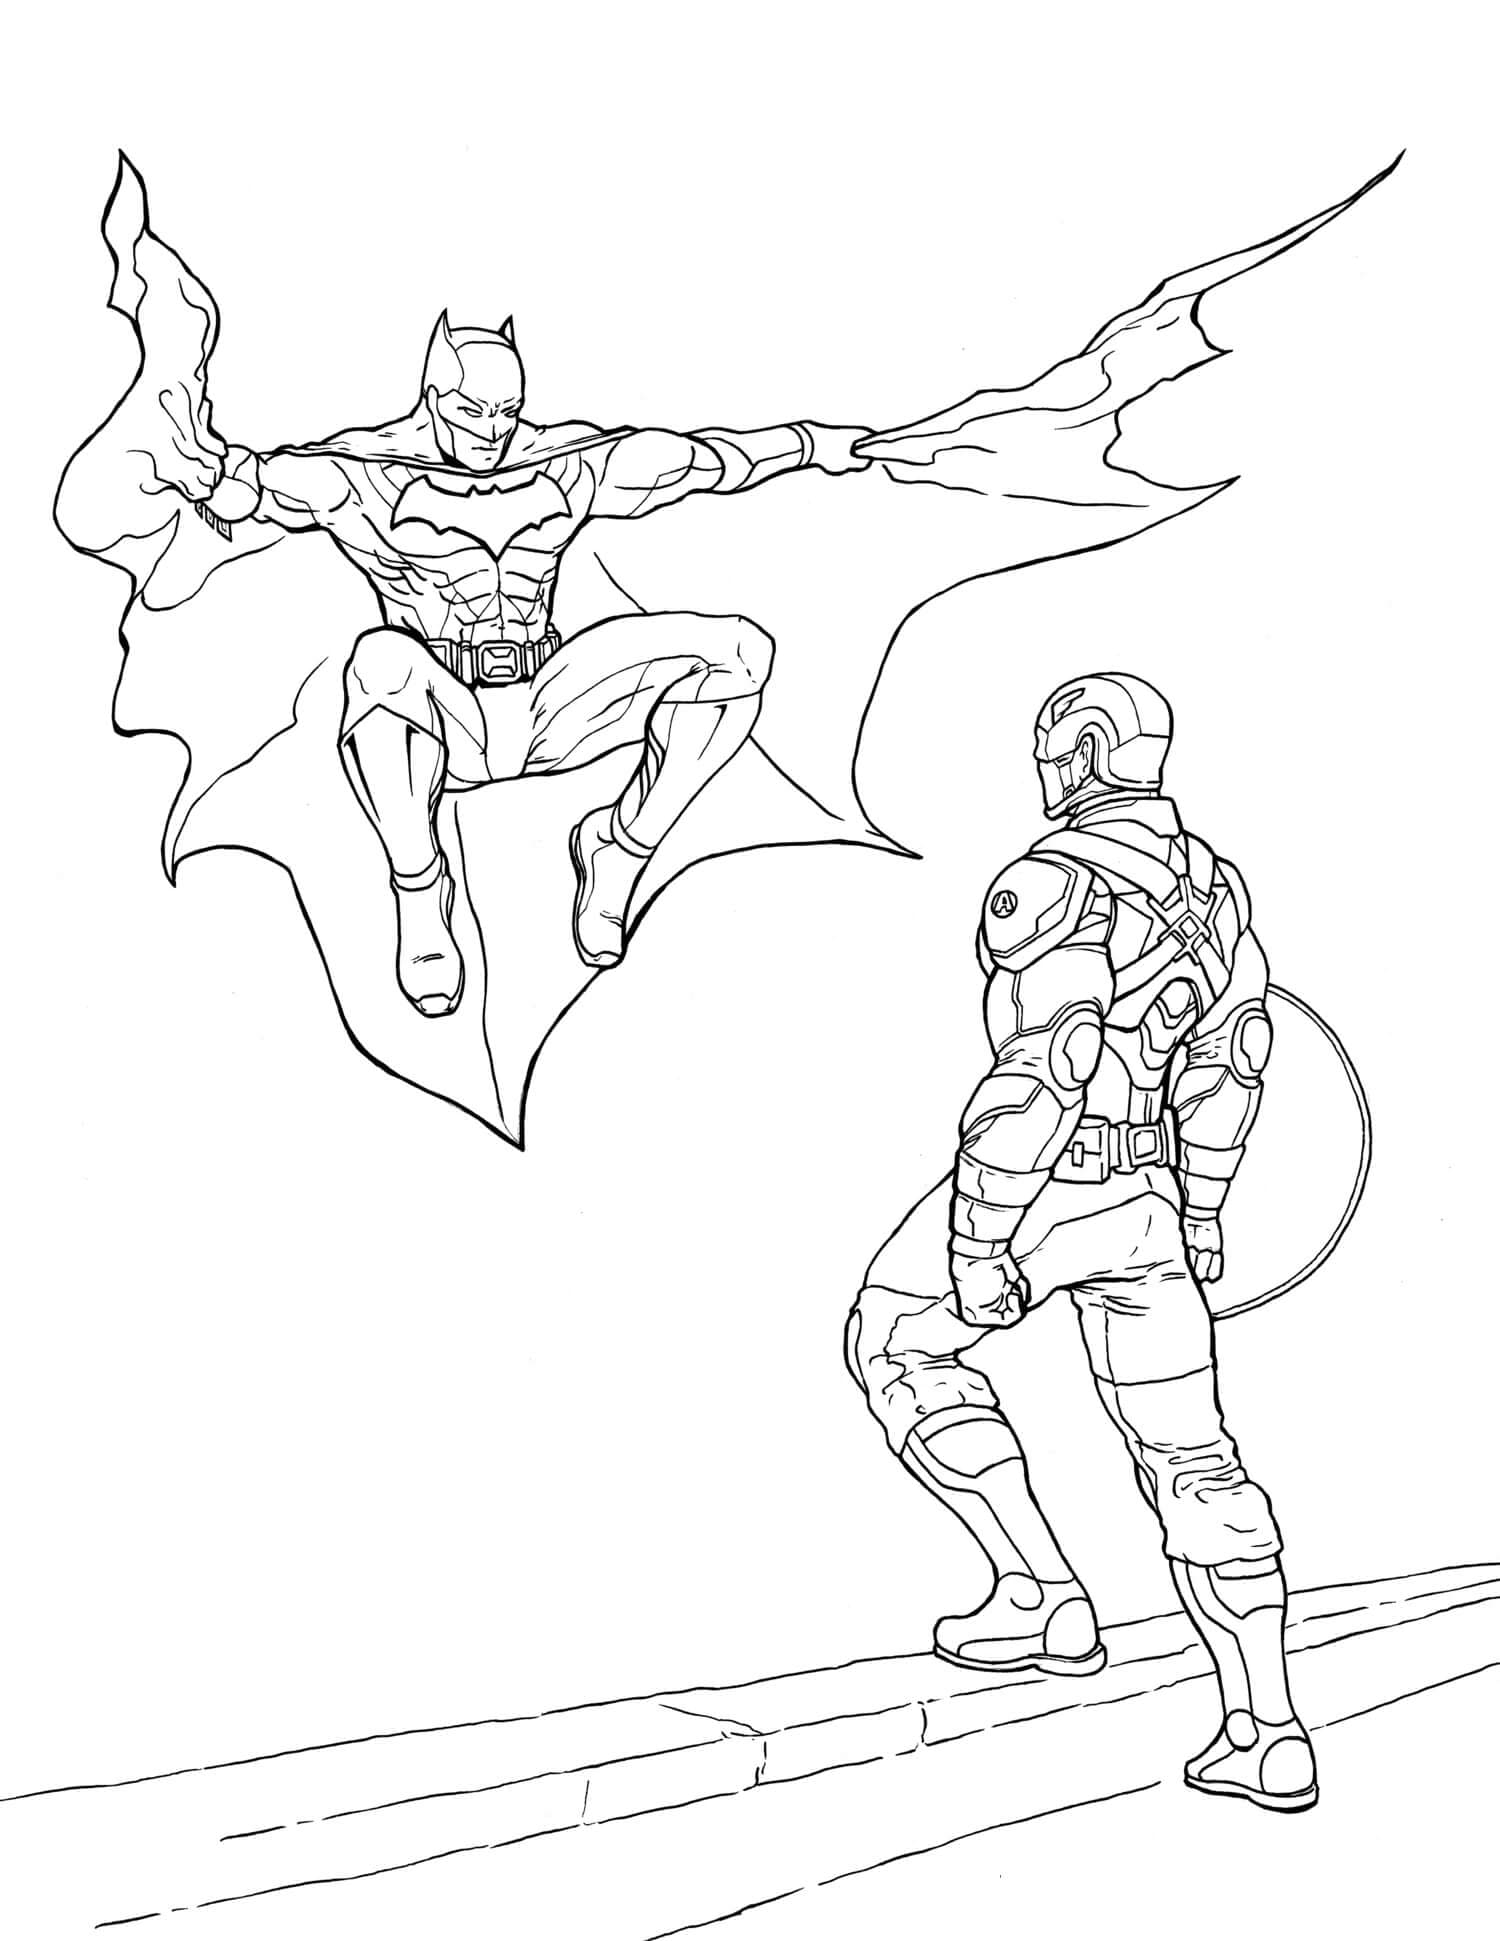 Batman gegen Captain America